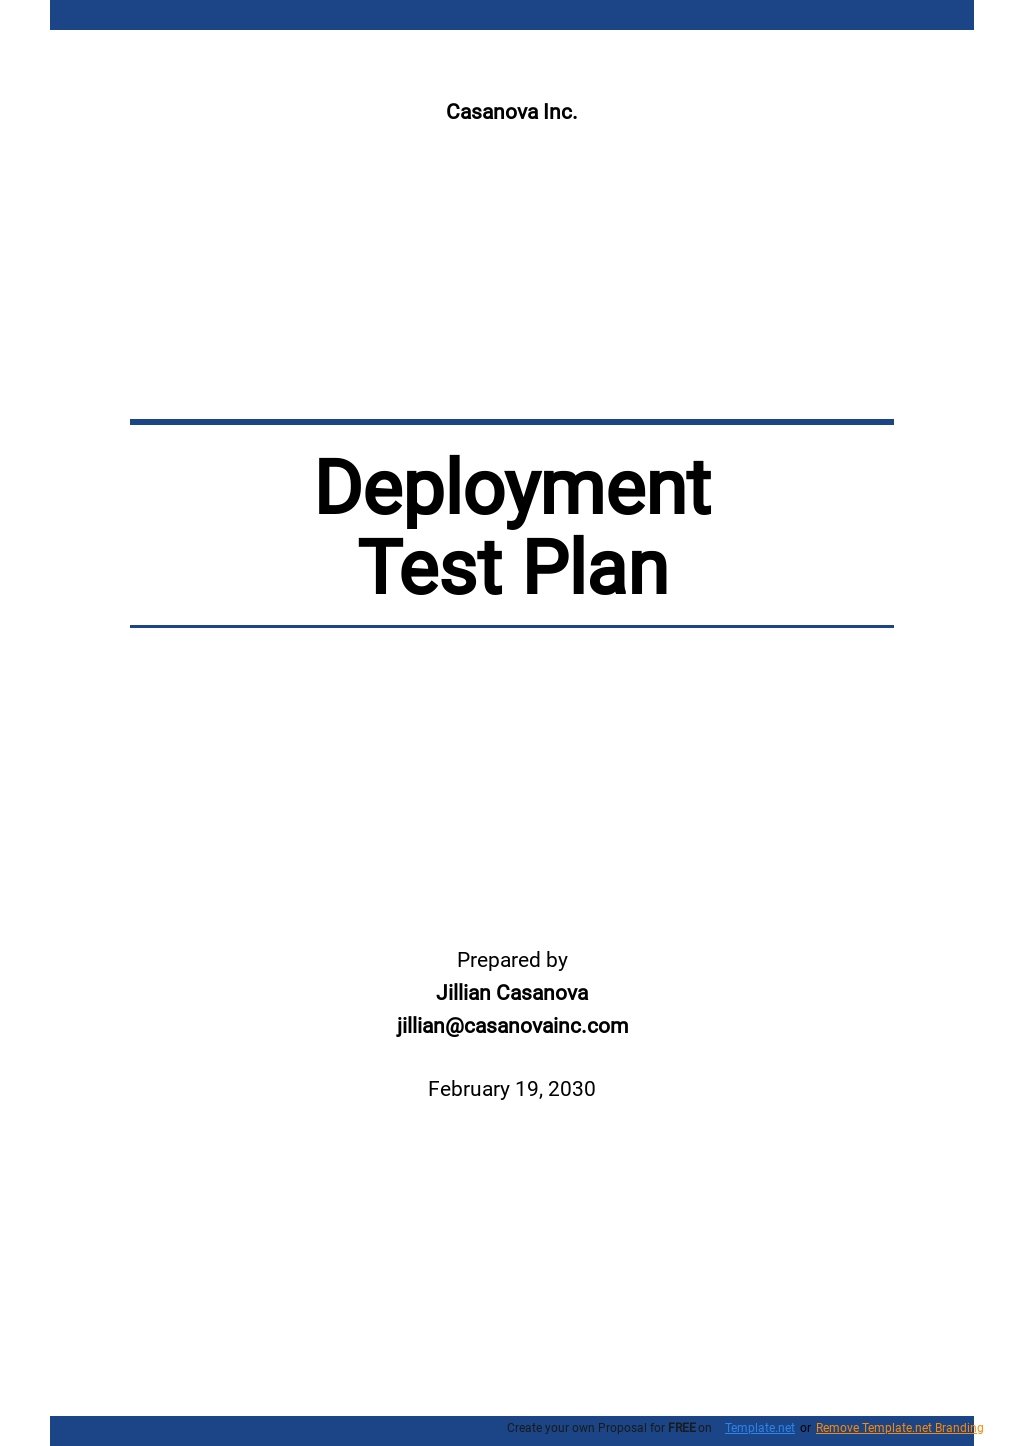 Deployment Test Plan Template